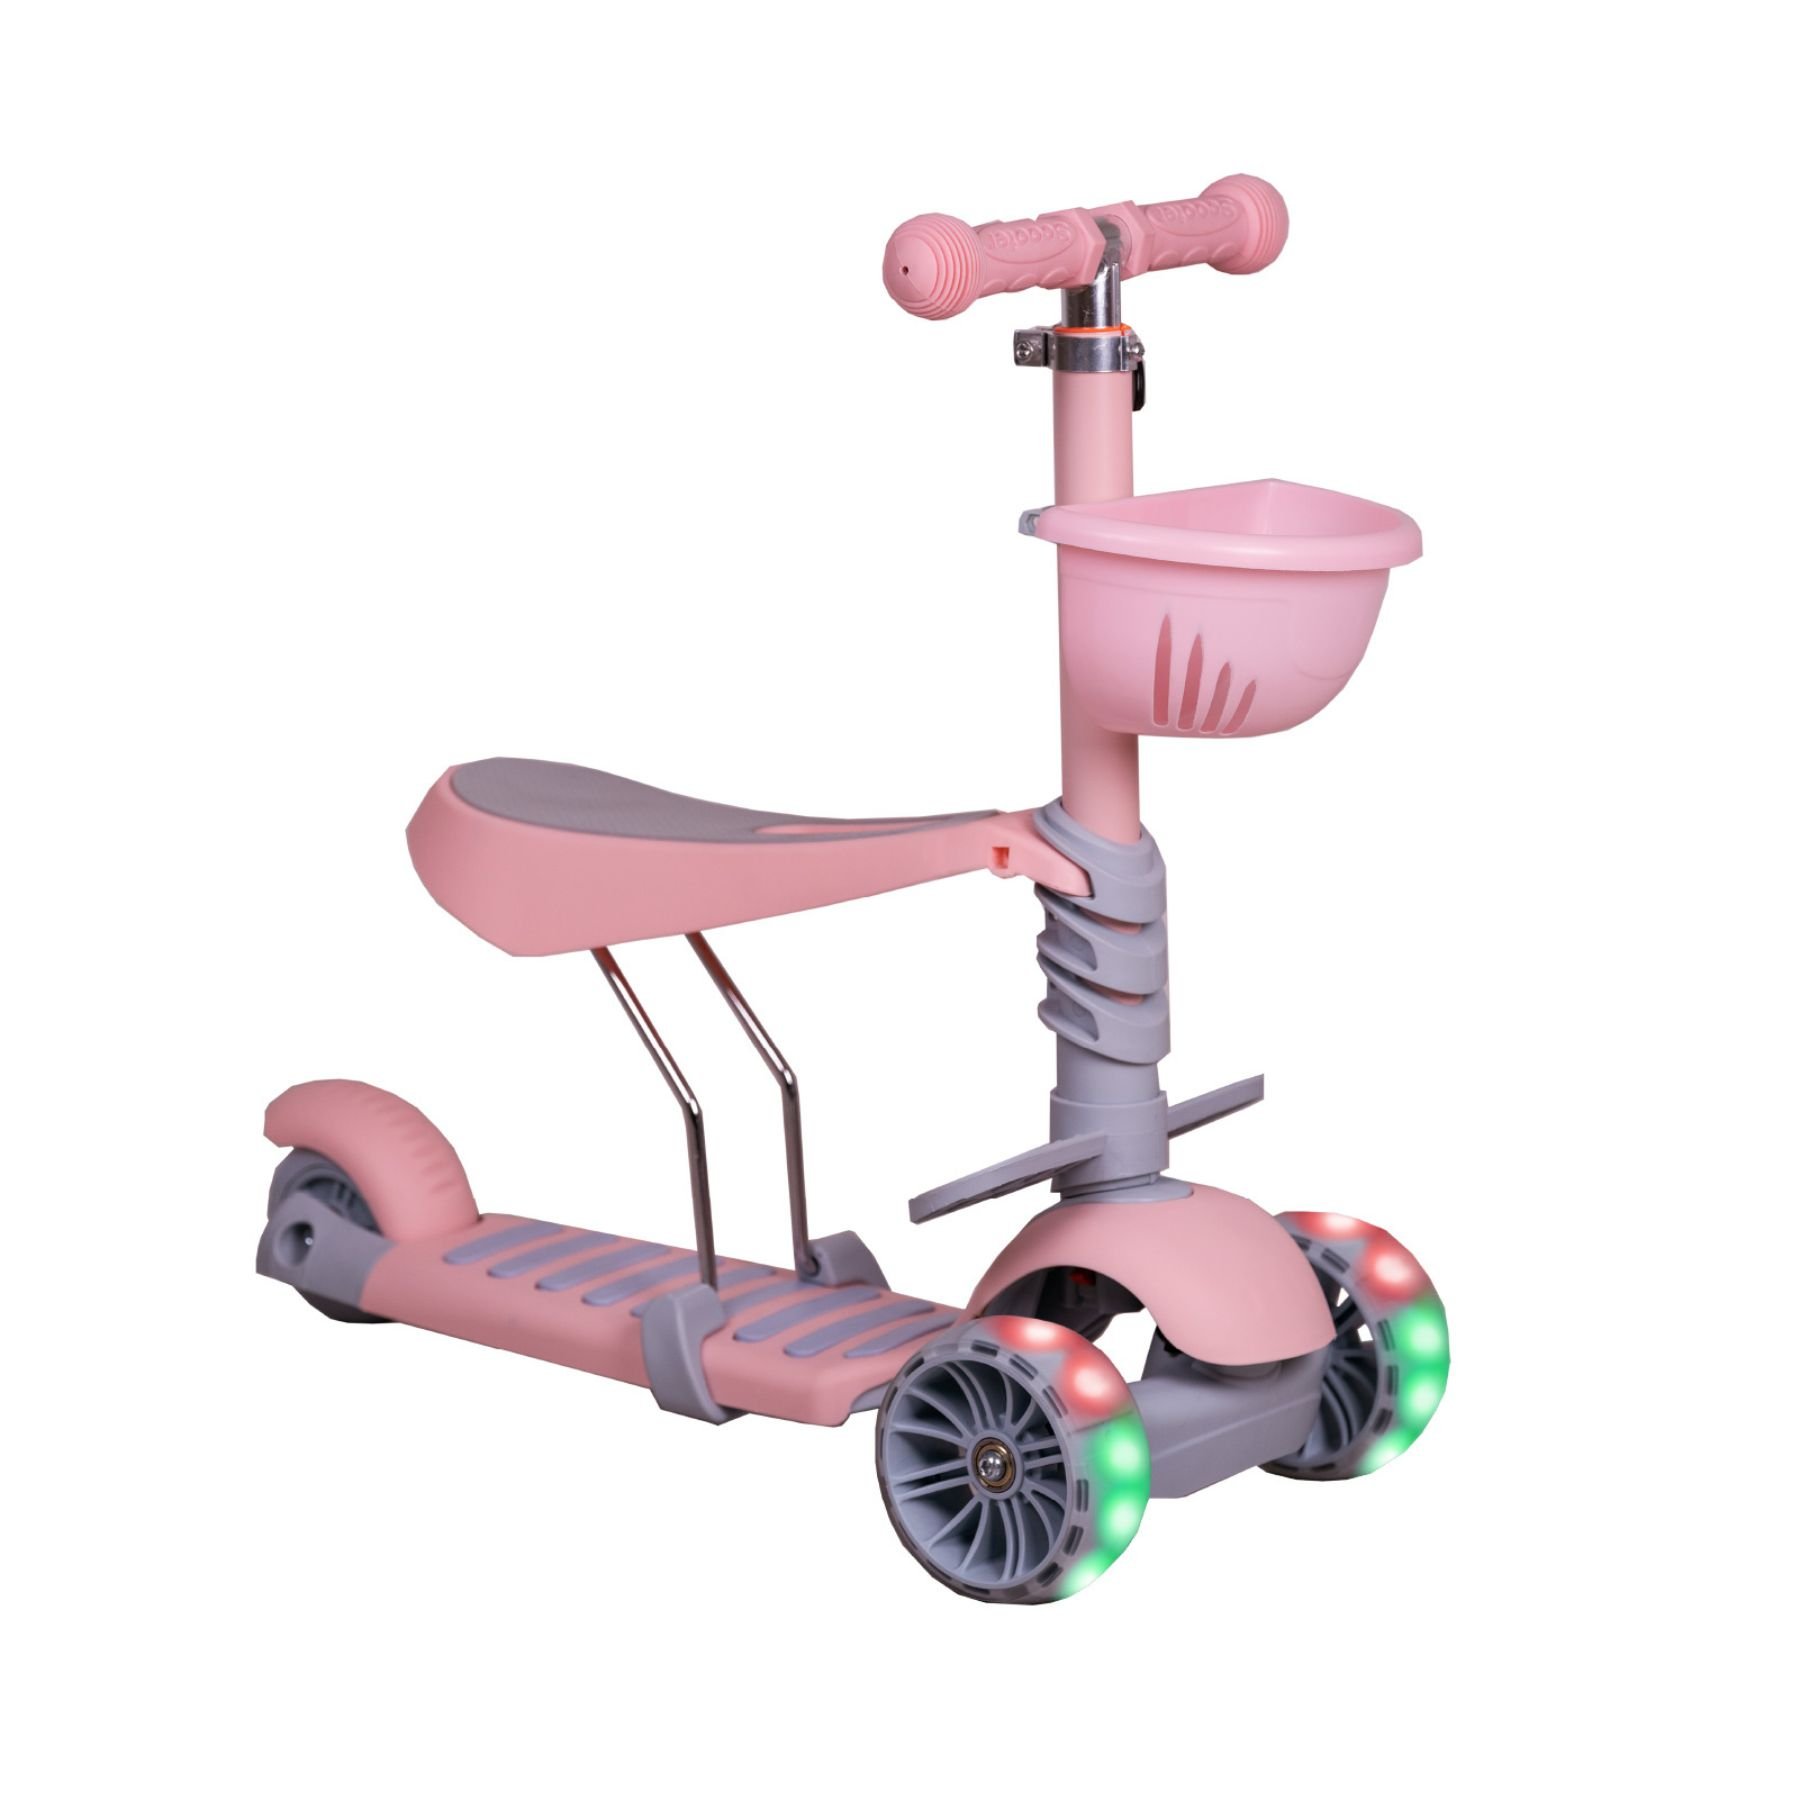 Patineta scooter con canasta monopatin con luces y sonidos para niña y niño  - Canela Hogar